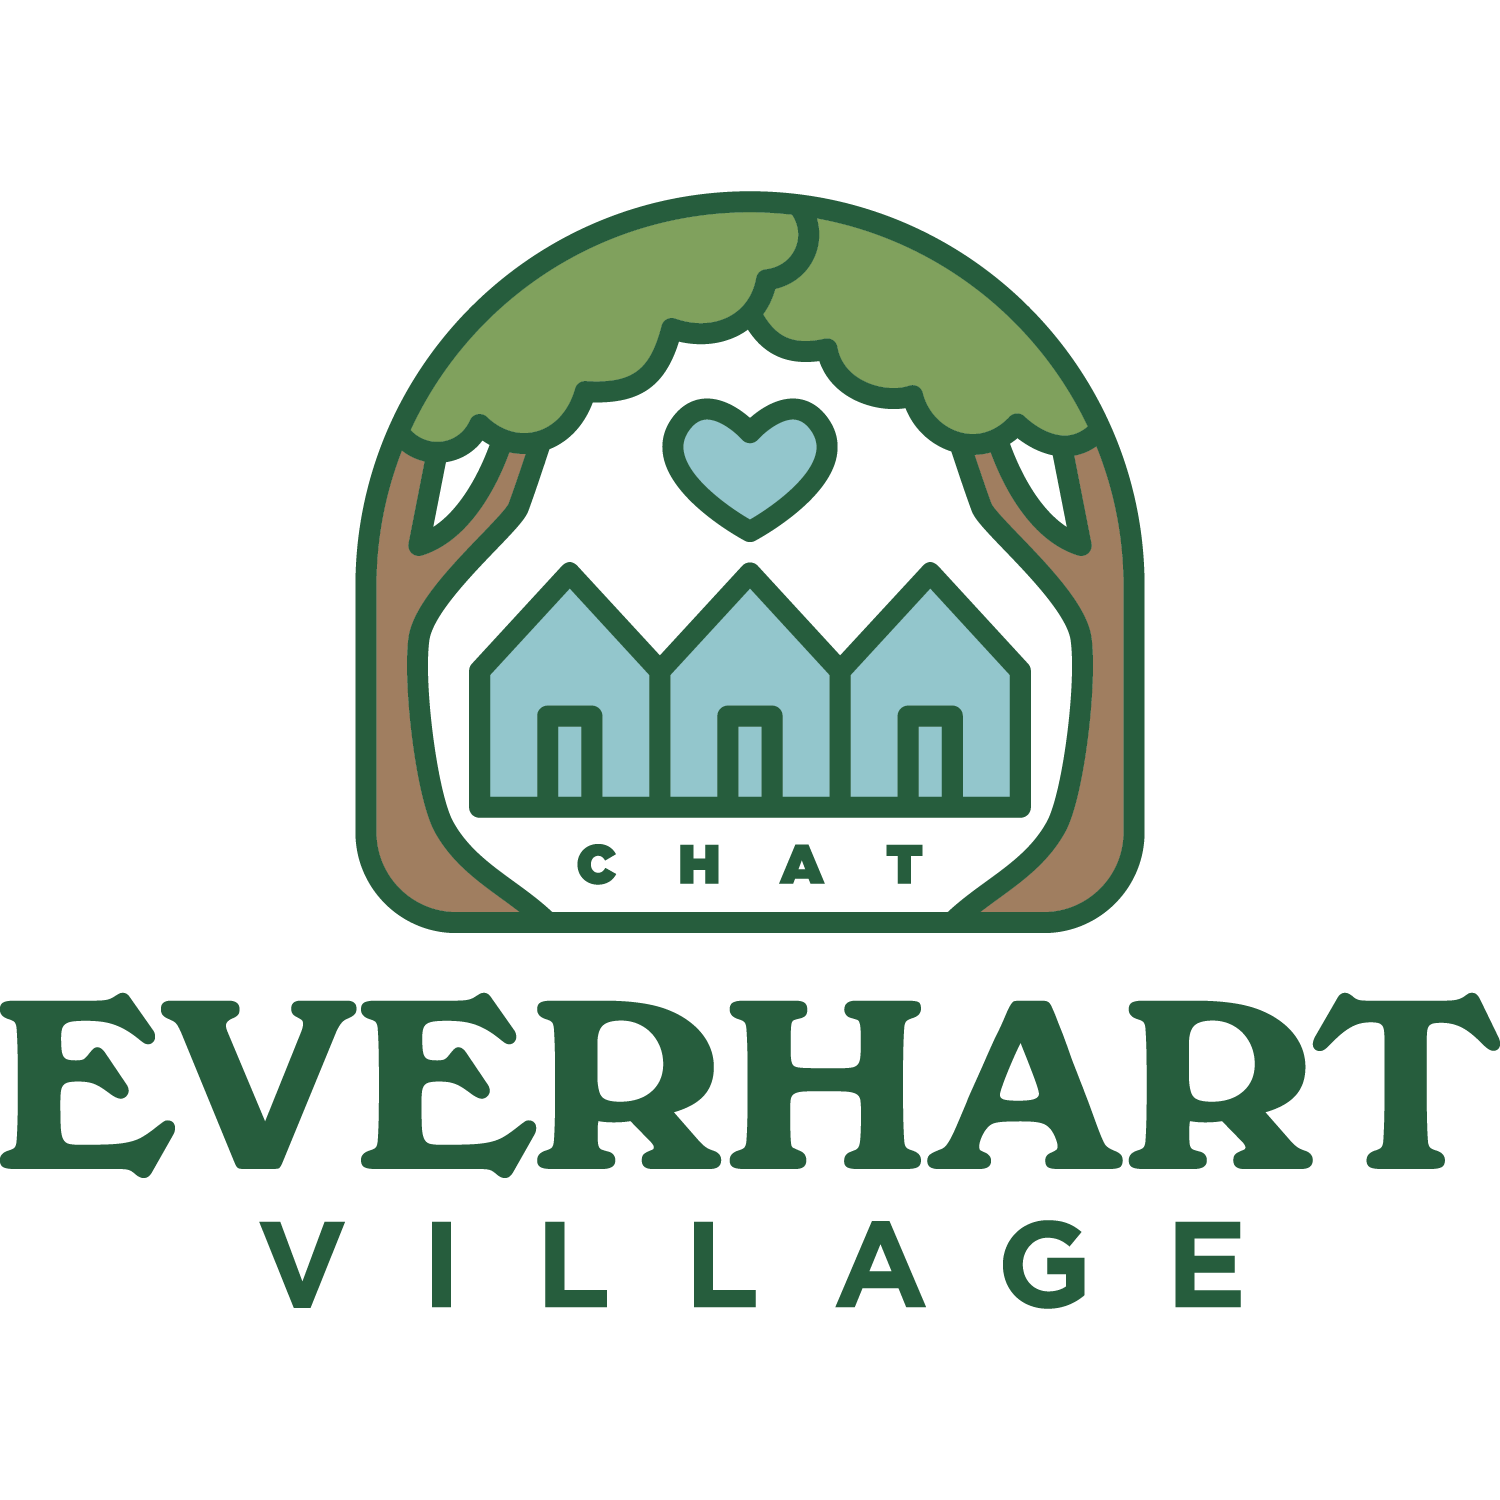 everhart village logo